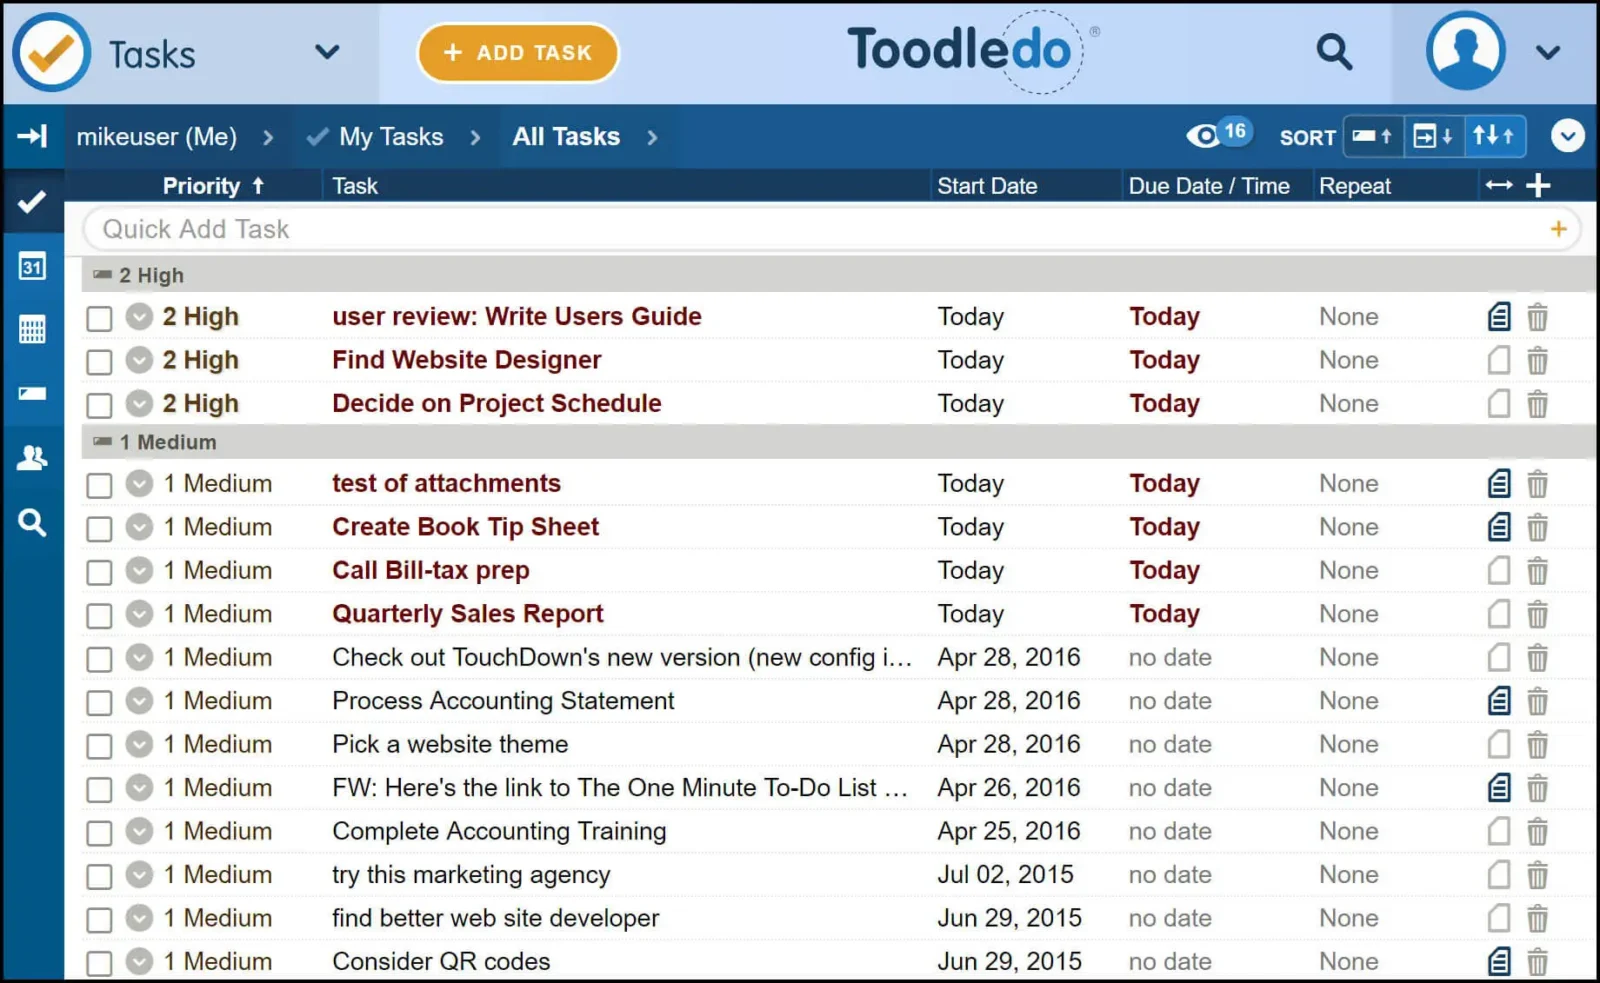 Toodledo is a popular to-do list app